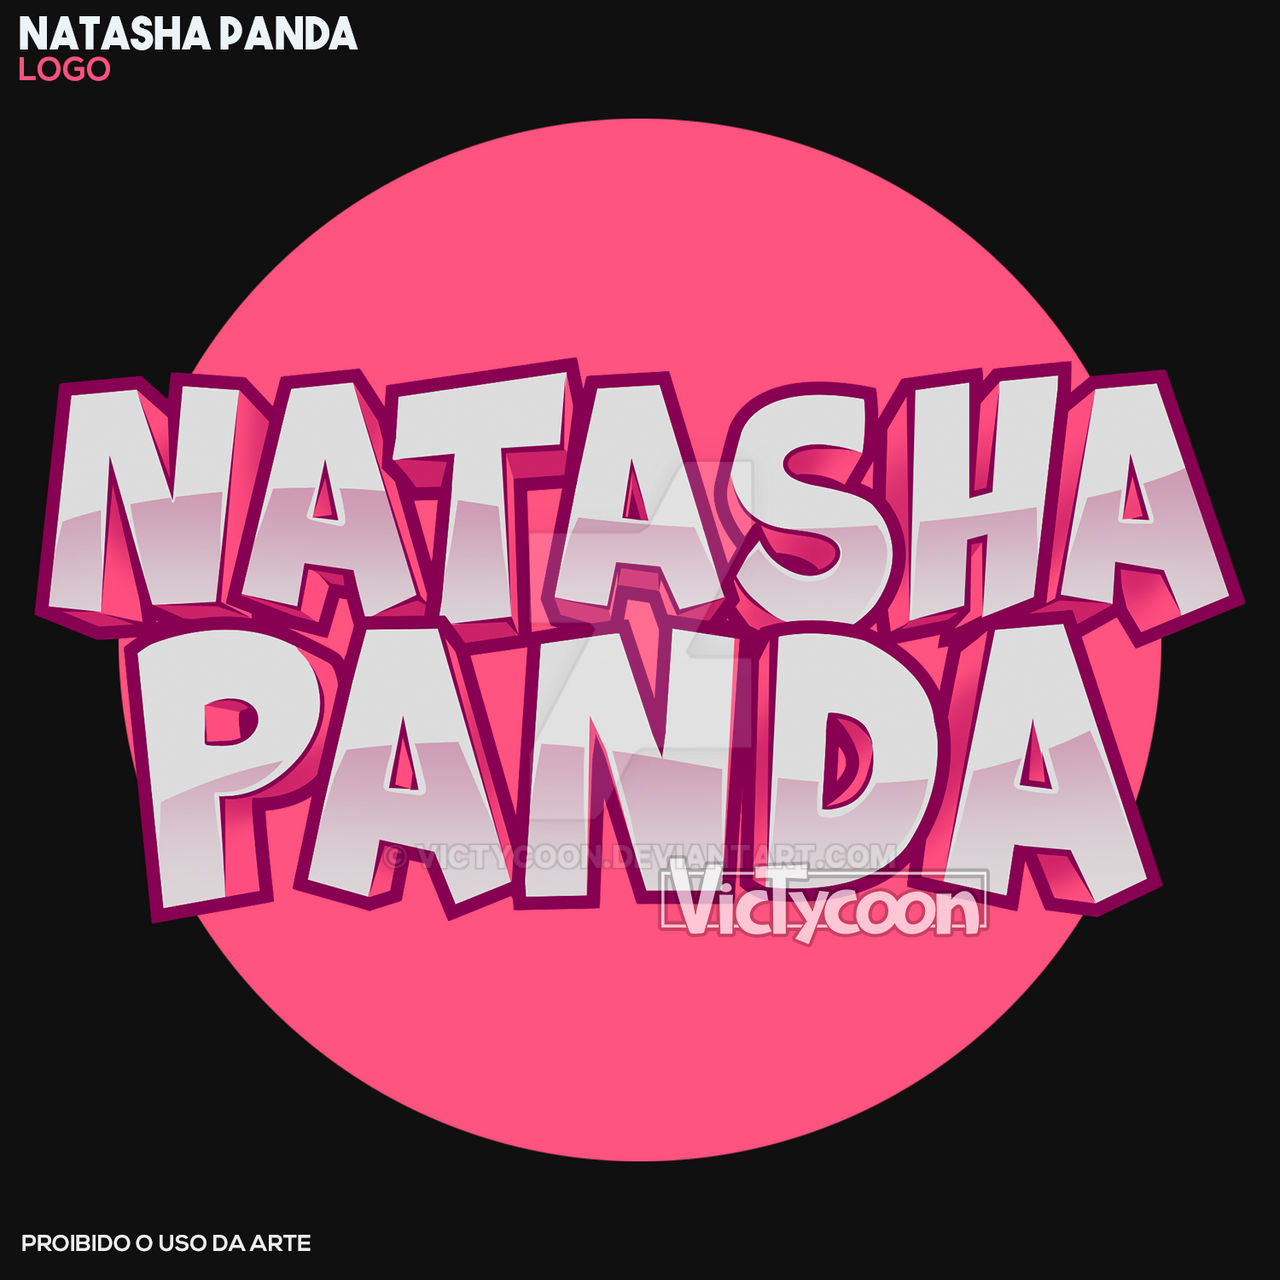 Natasha panda.oficial